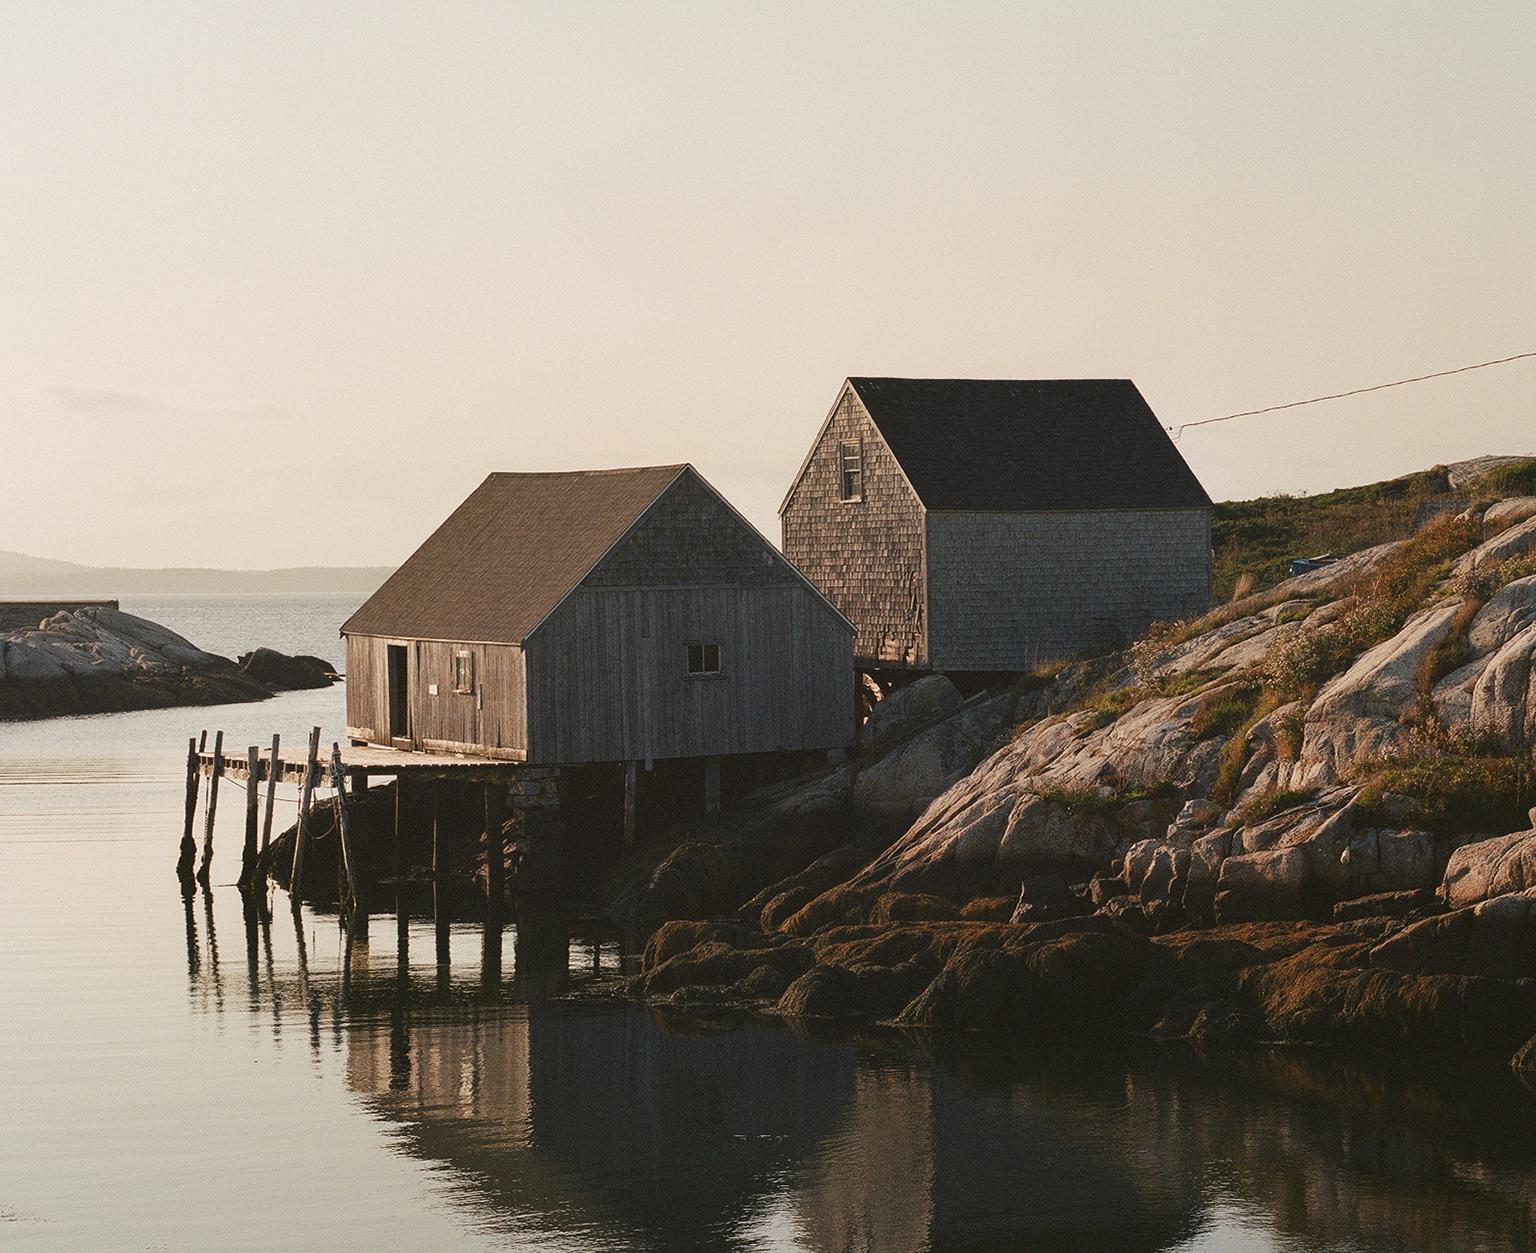 Peggy's Cove, Nova Scotia - Photograph by Jim Ryce